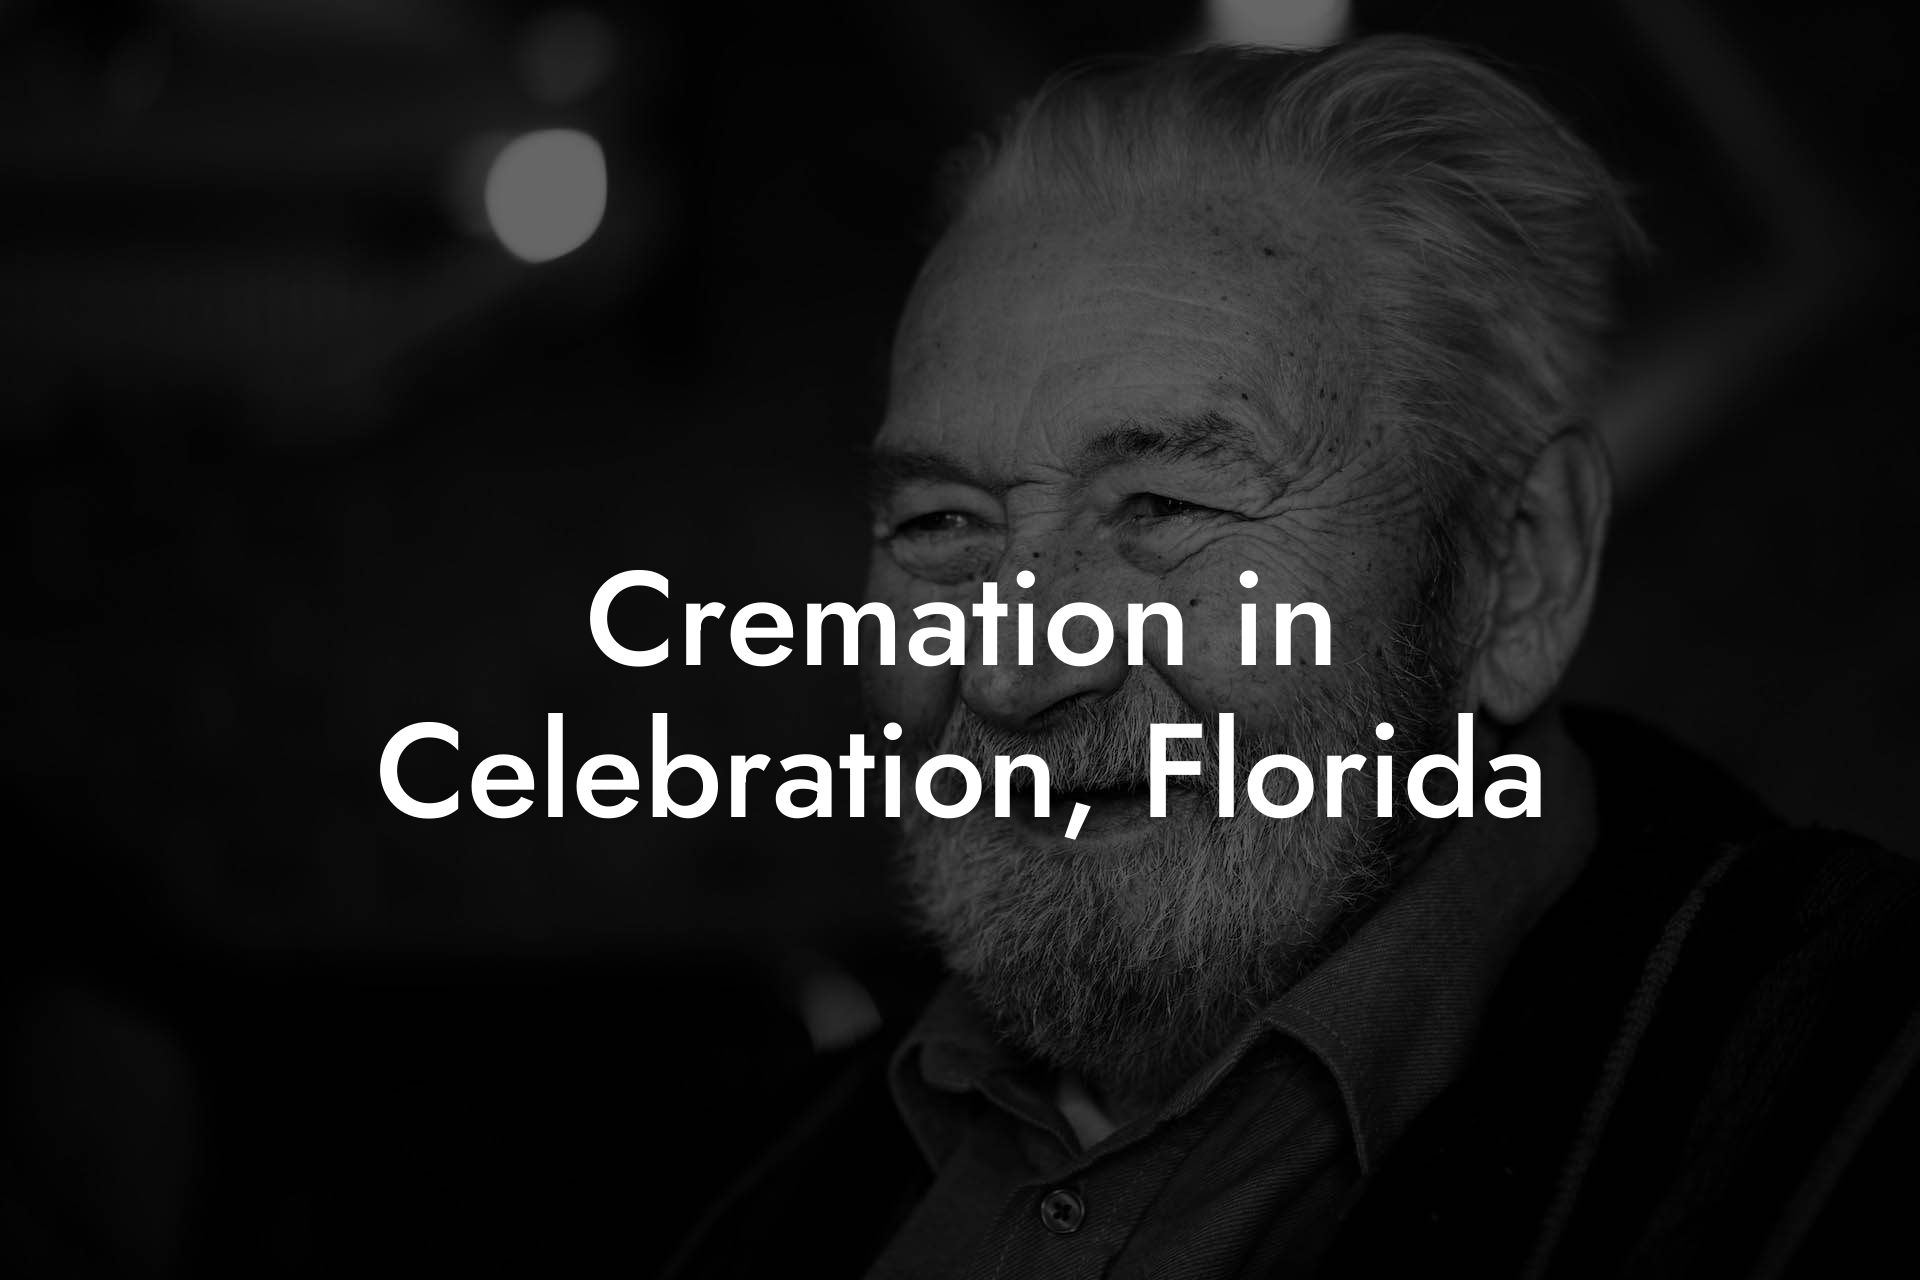 Cremation in Celebration, Florida